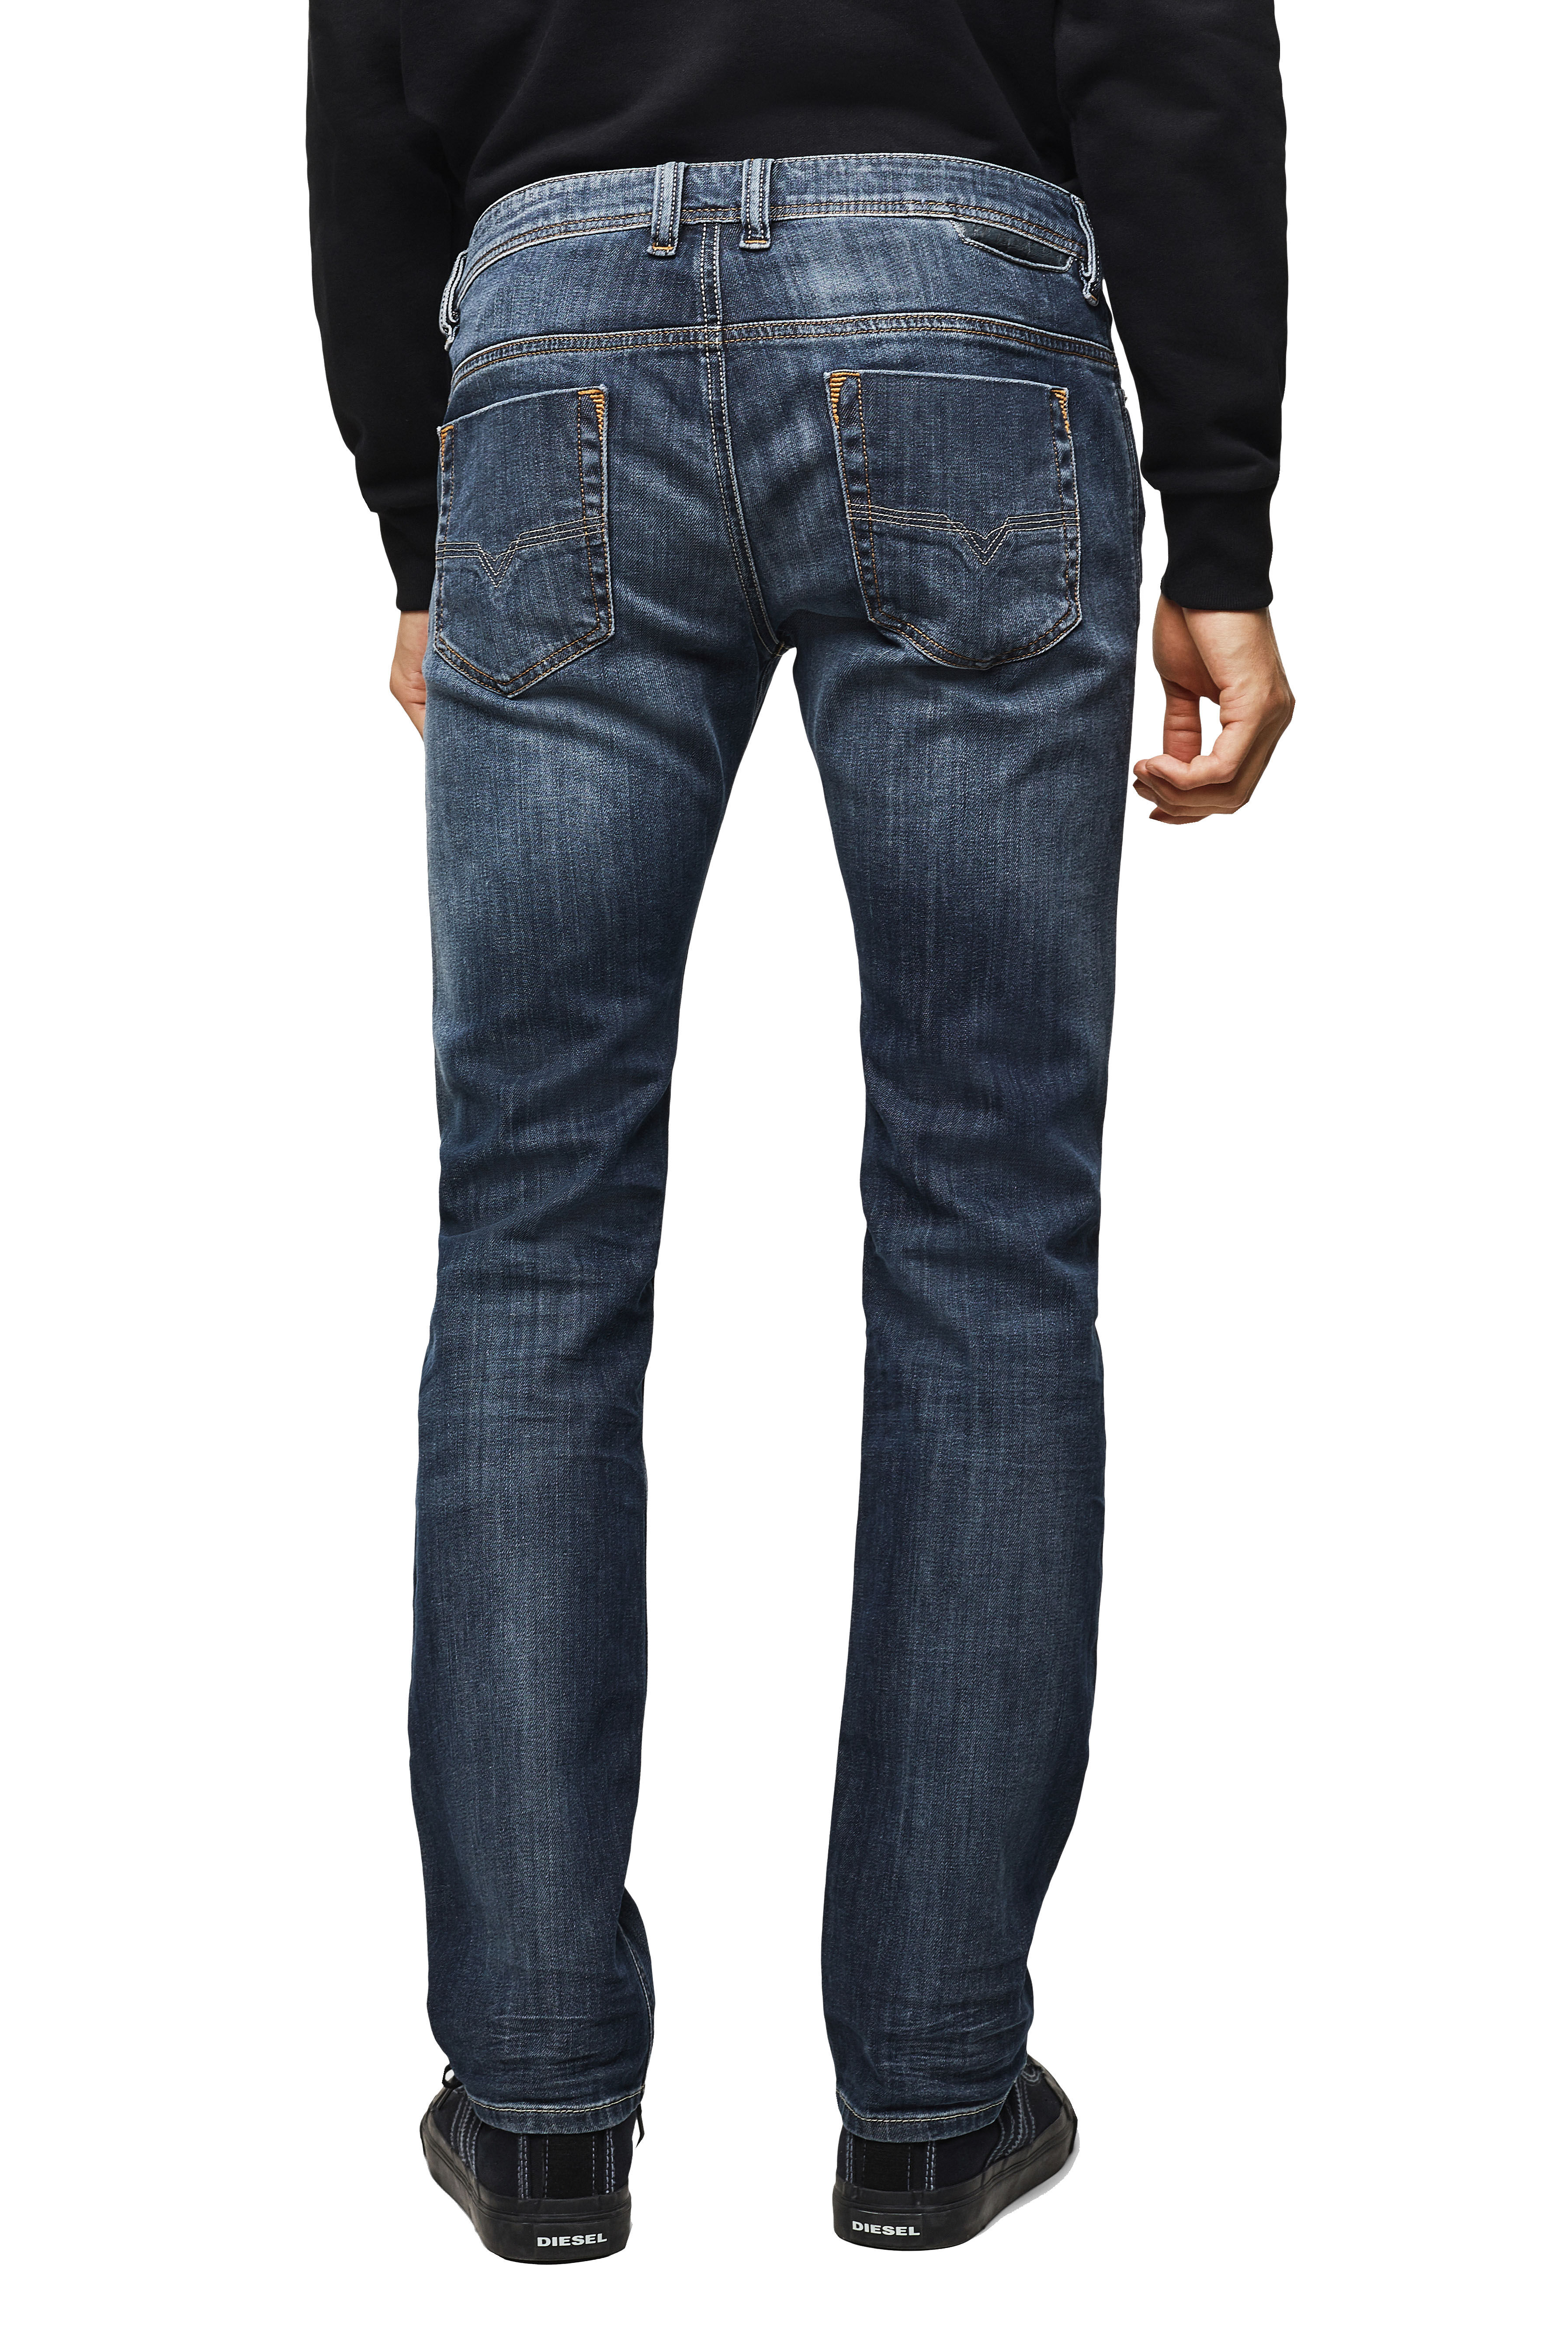 Gallantry master board Safado Straight Jeans 0885K: Dark blue, Stretch | Diesel